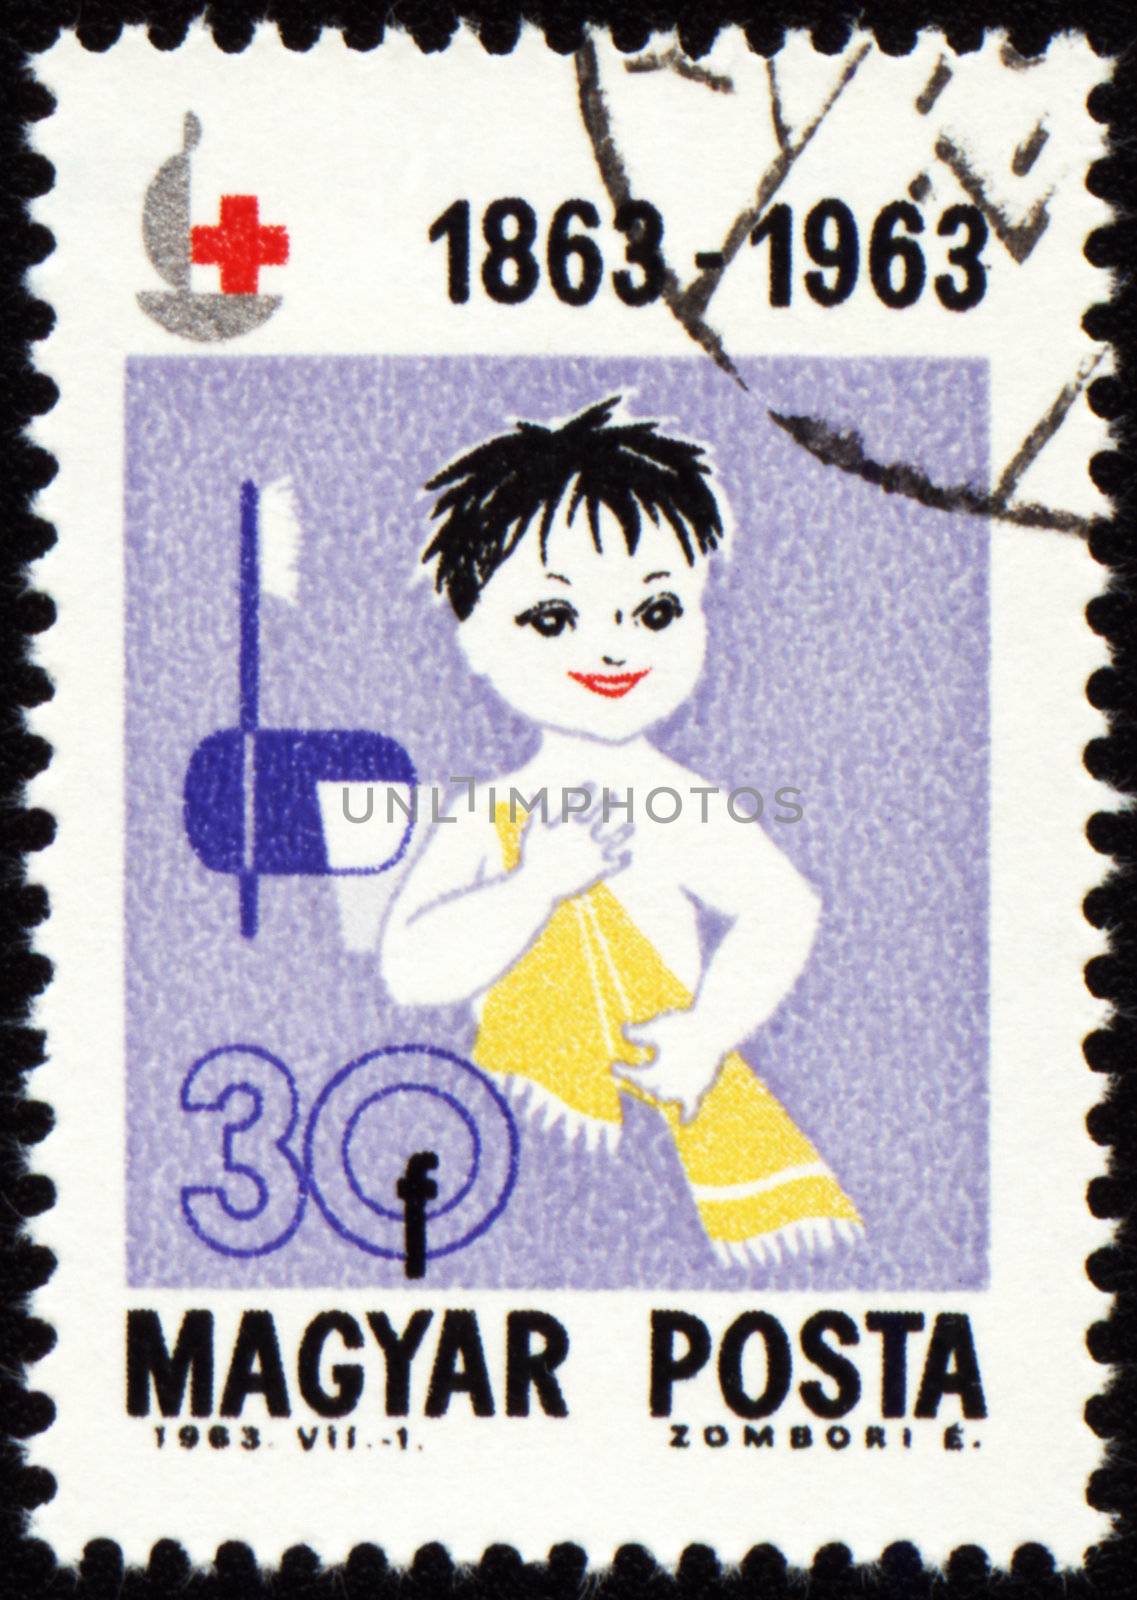 HUNGARY - CIRCA 1963: A stamp printed in Hungary, shows baby wash, circa 1963